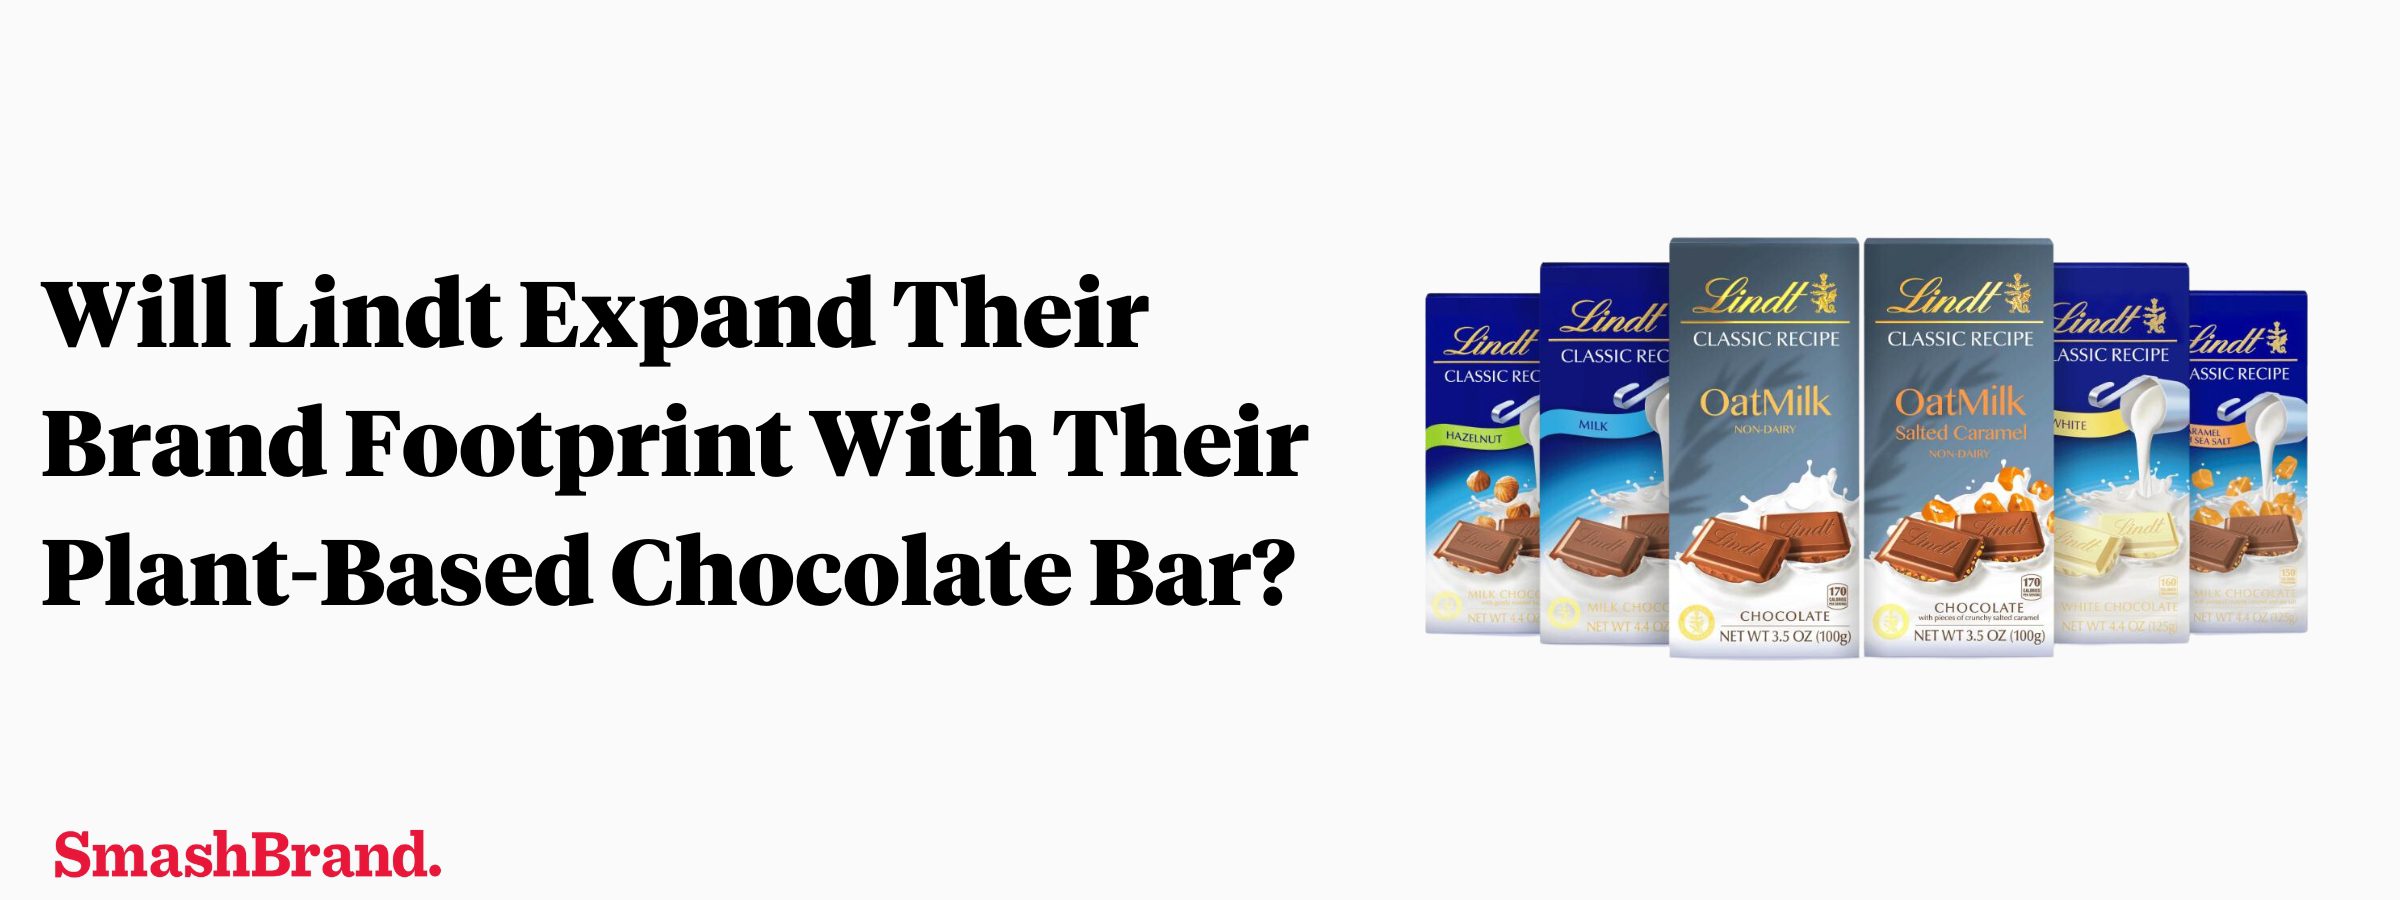 Lindt Chocolate Bar Packaging Design